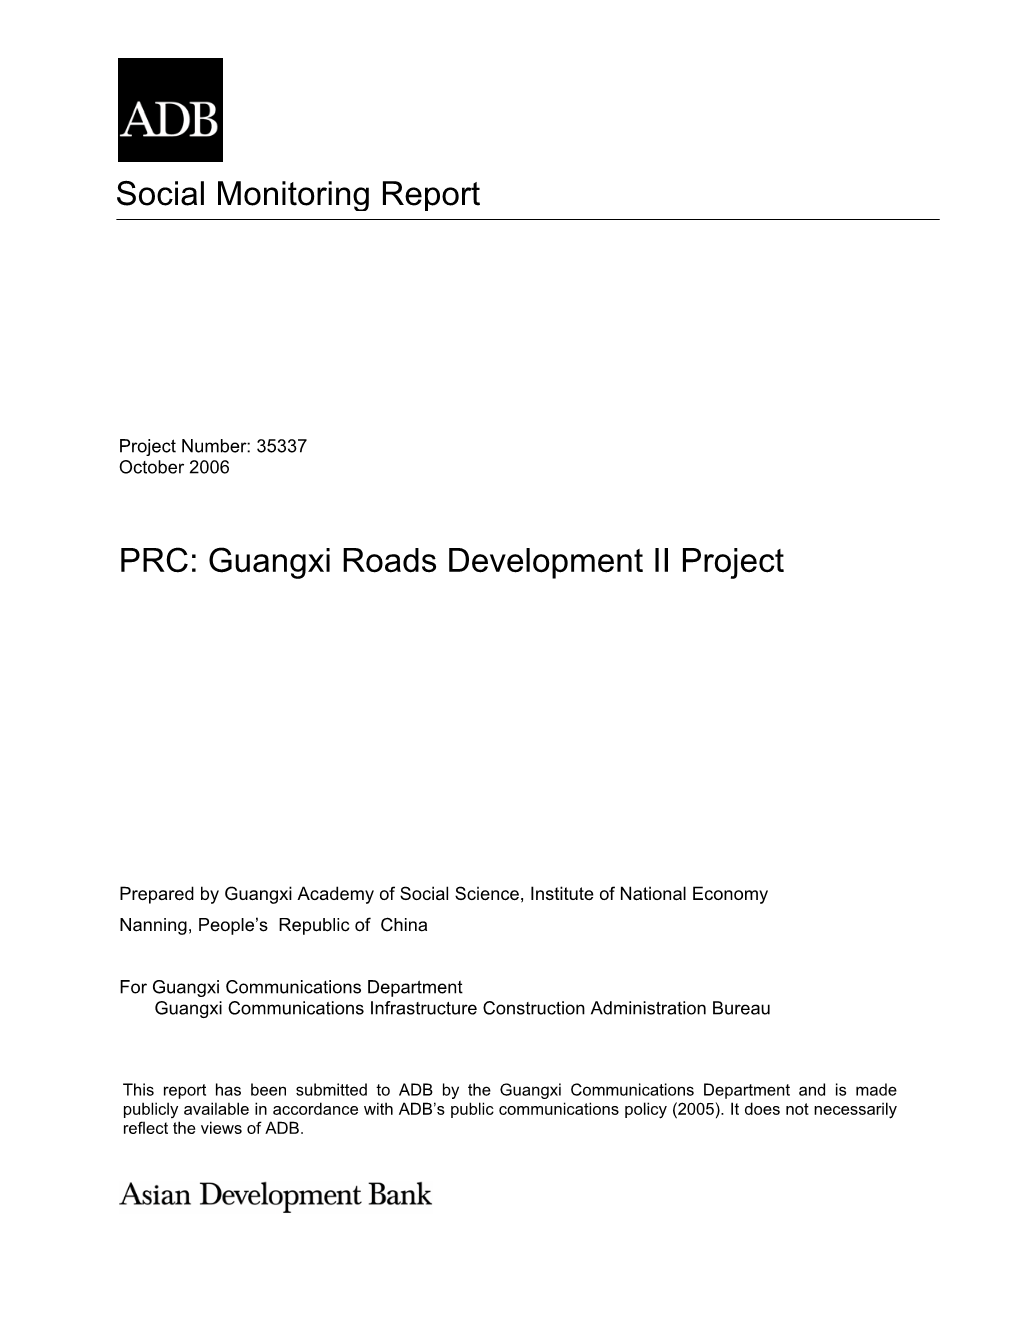 Guangxi Roads Development II Project